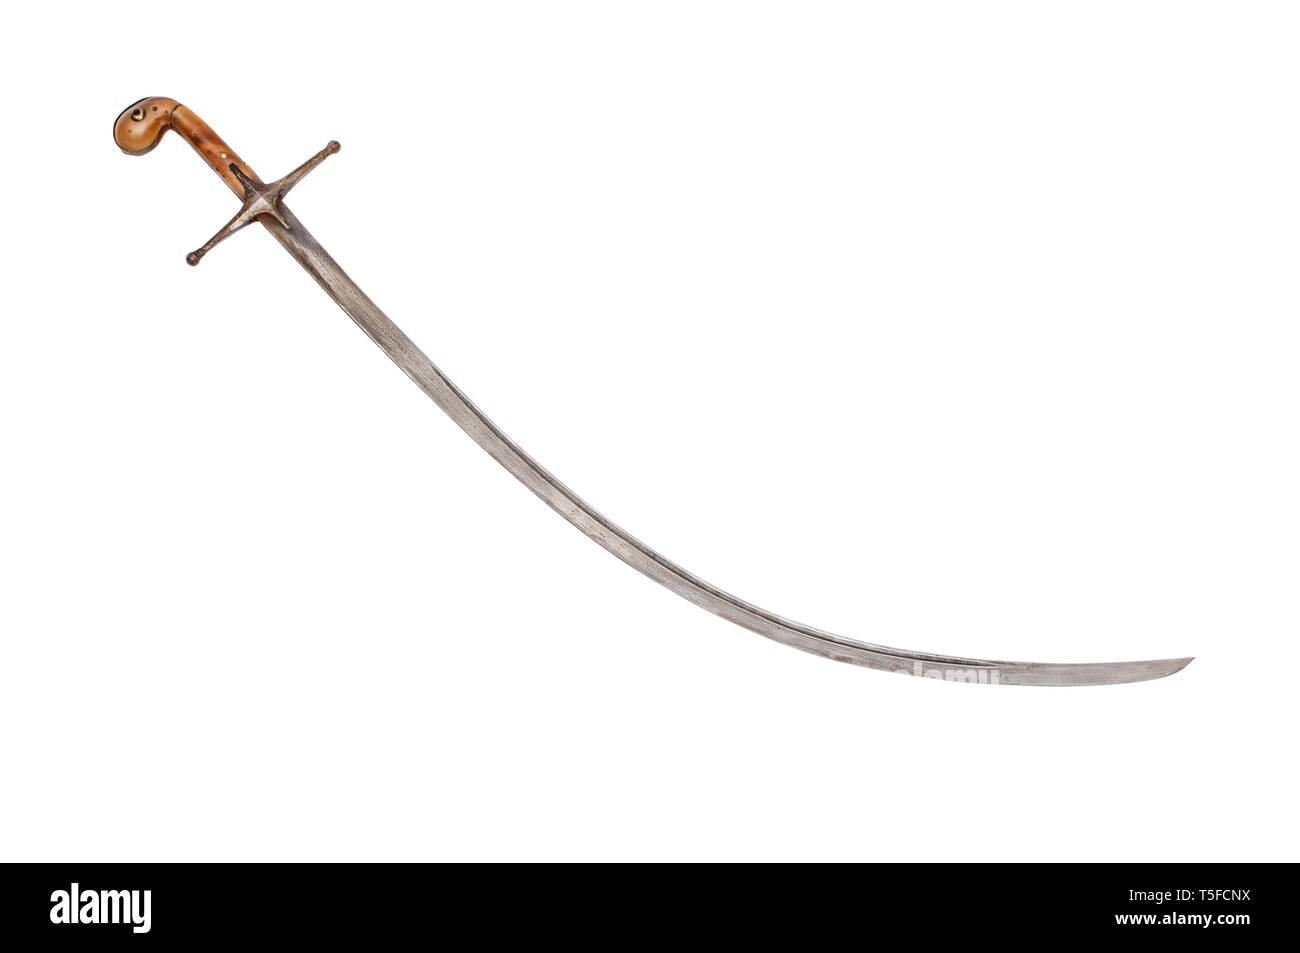 The 19th century turkish shamshir saber with wootz blade. Stock Photo